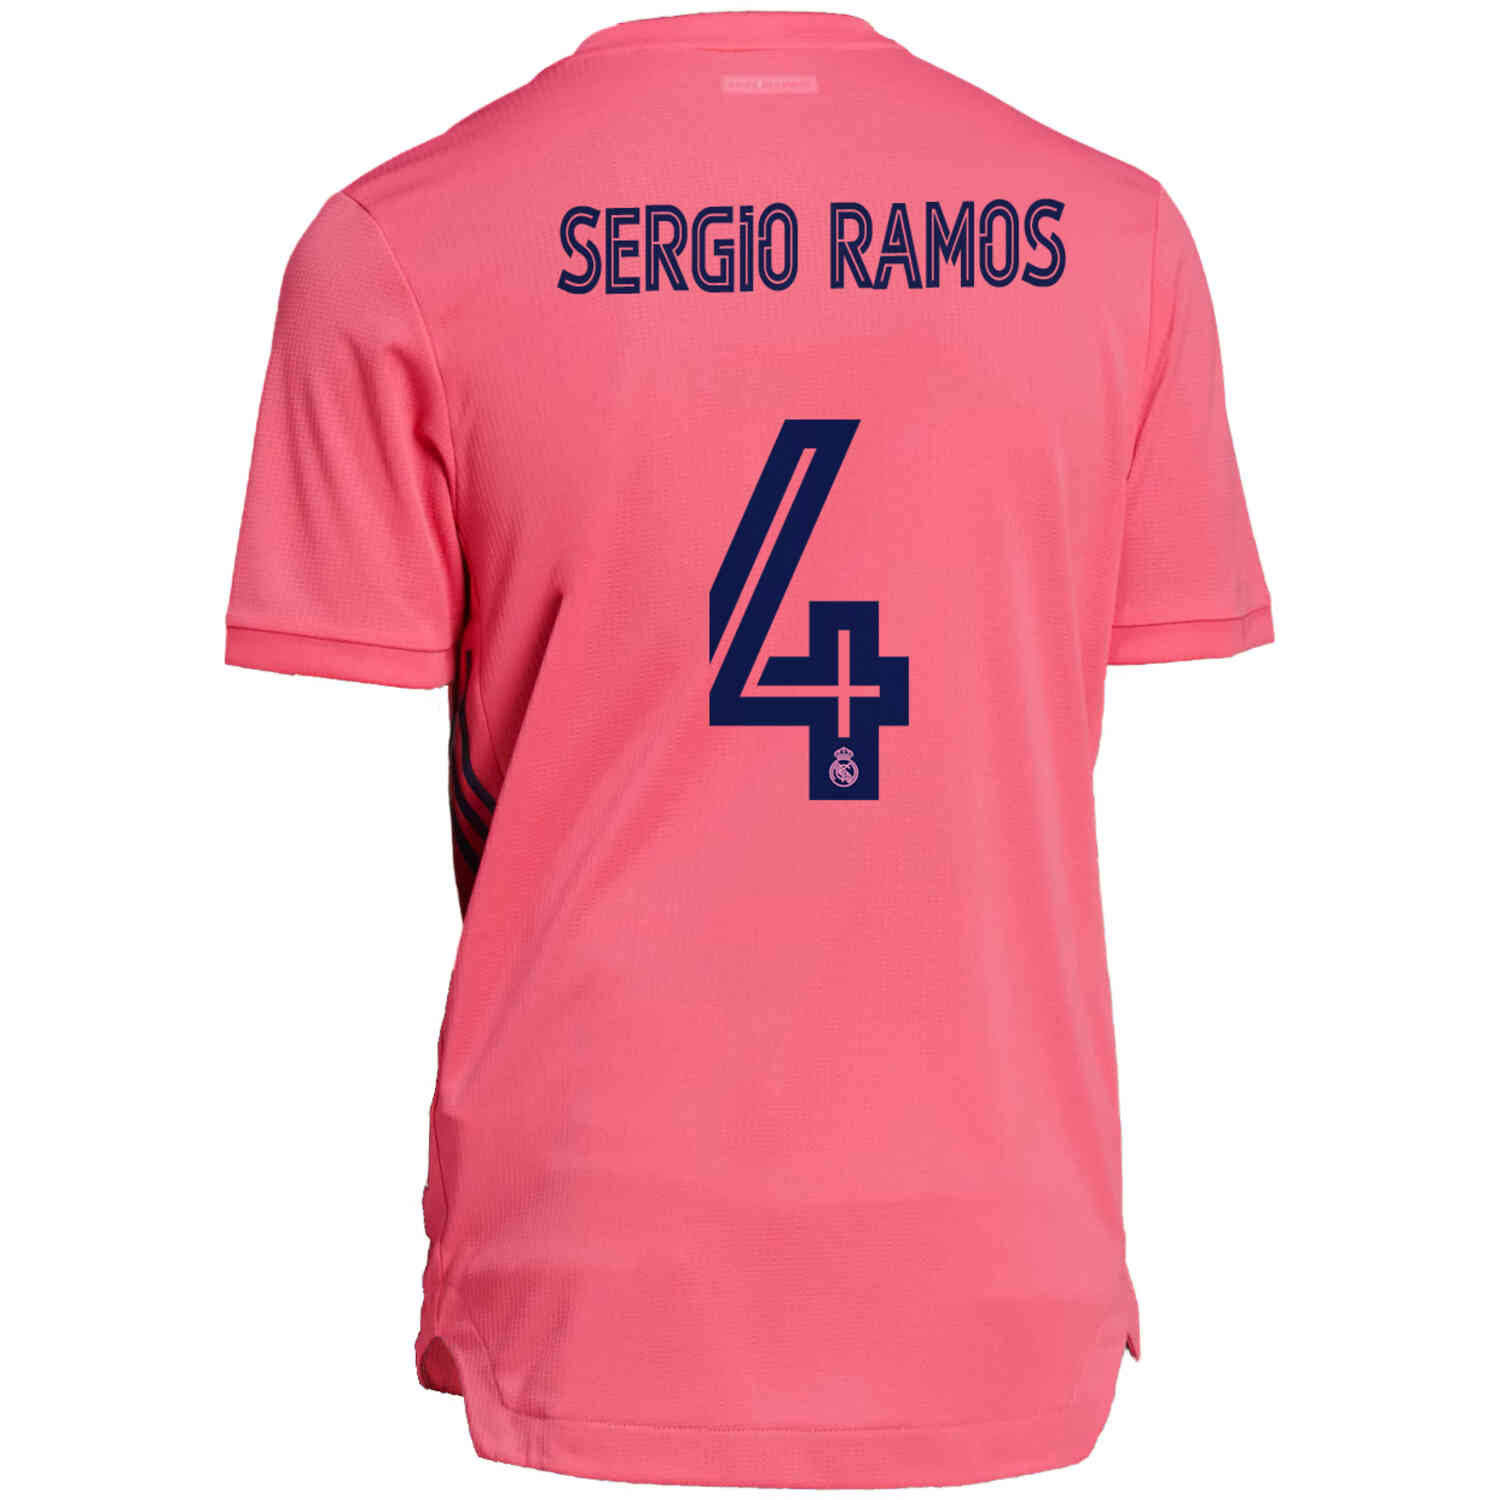 2020/21 adidas Sergio Ramos Real Madrid Away - SoccerPro